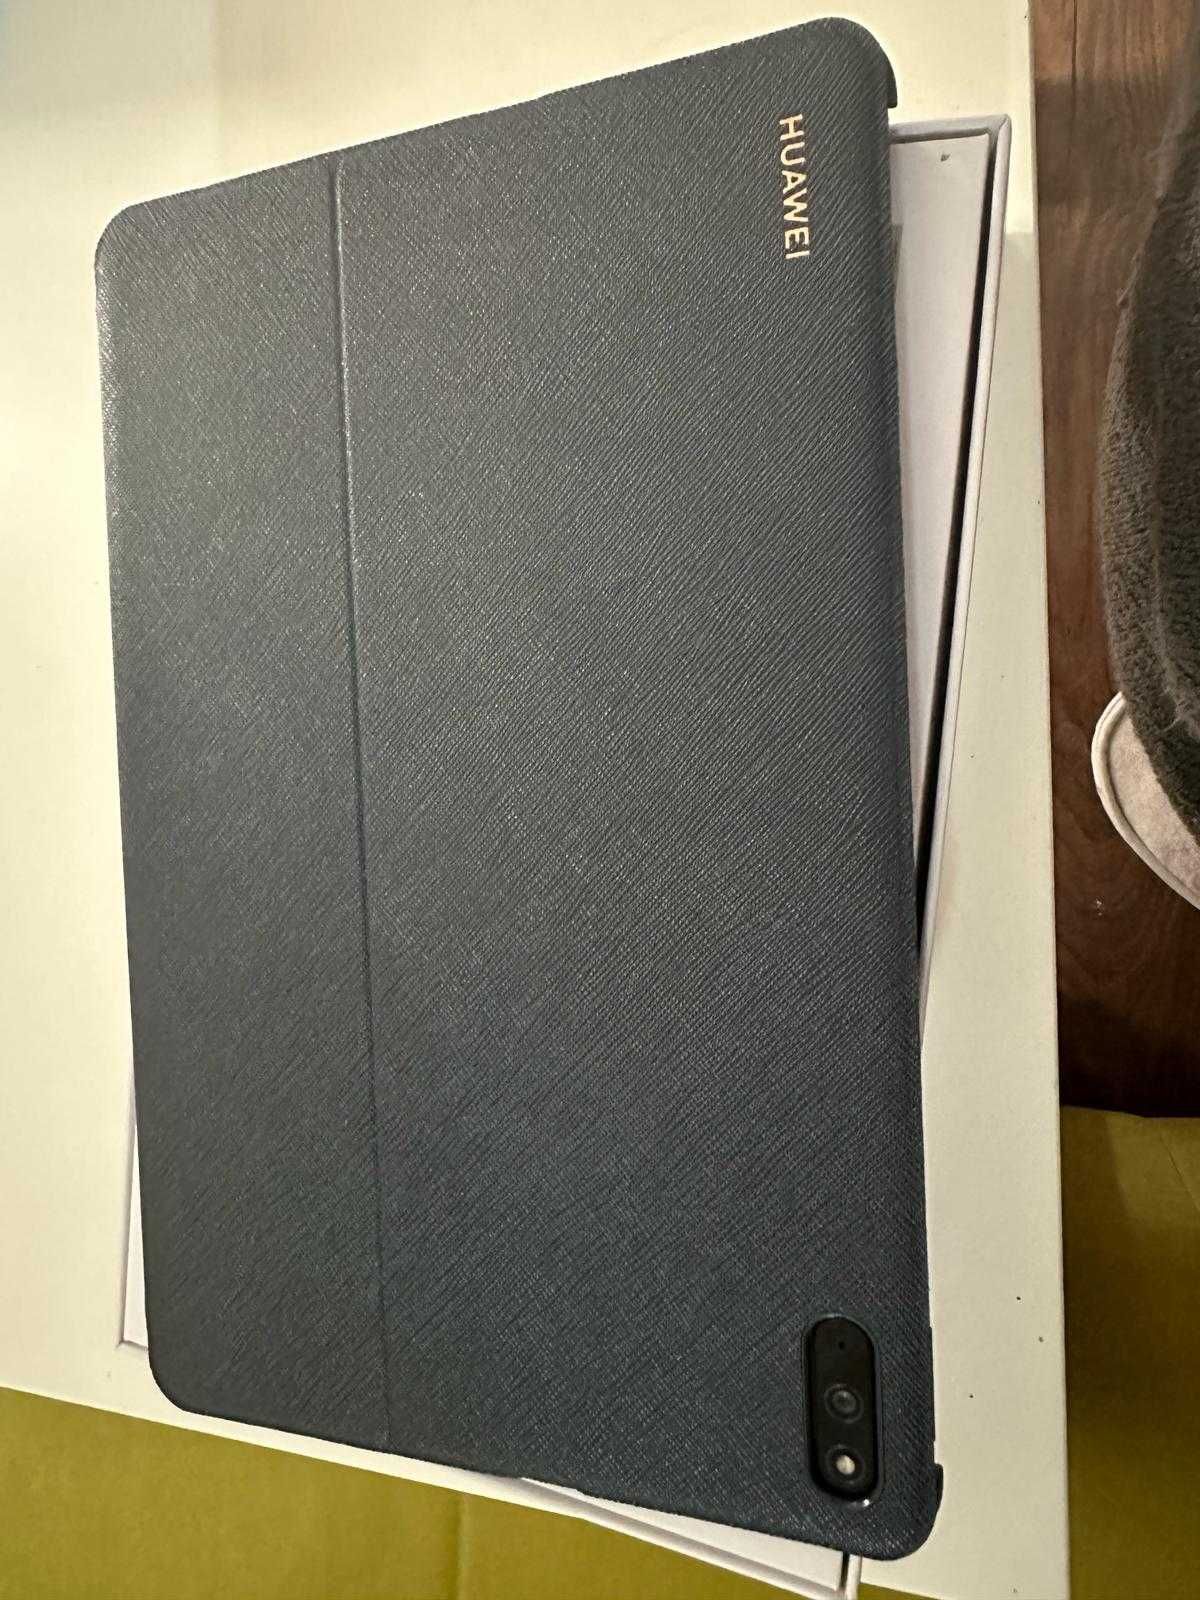 Tableta Huawei MatePad 10.4